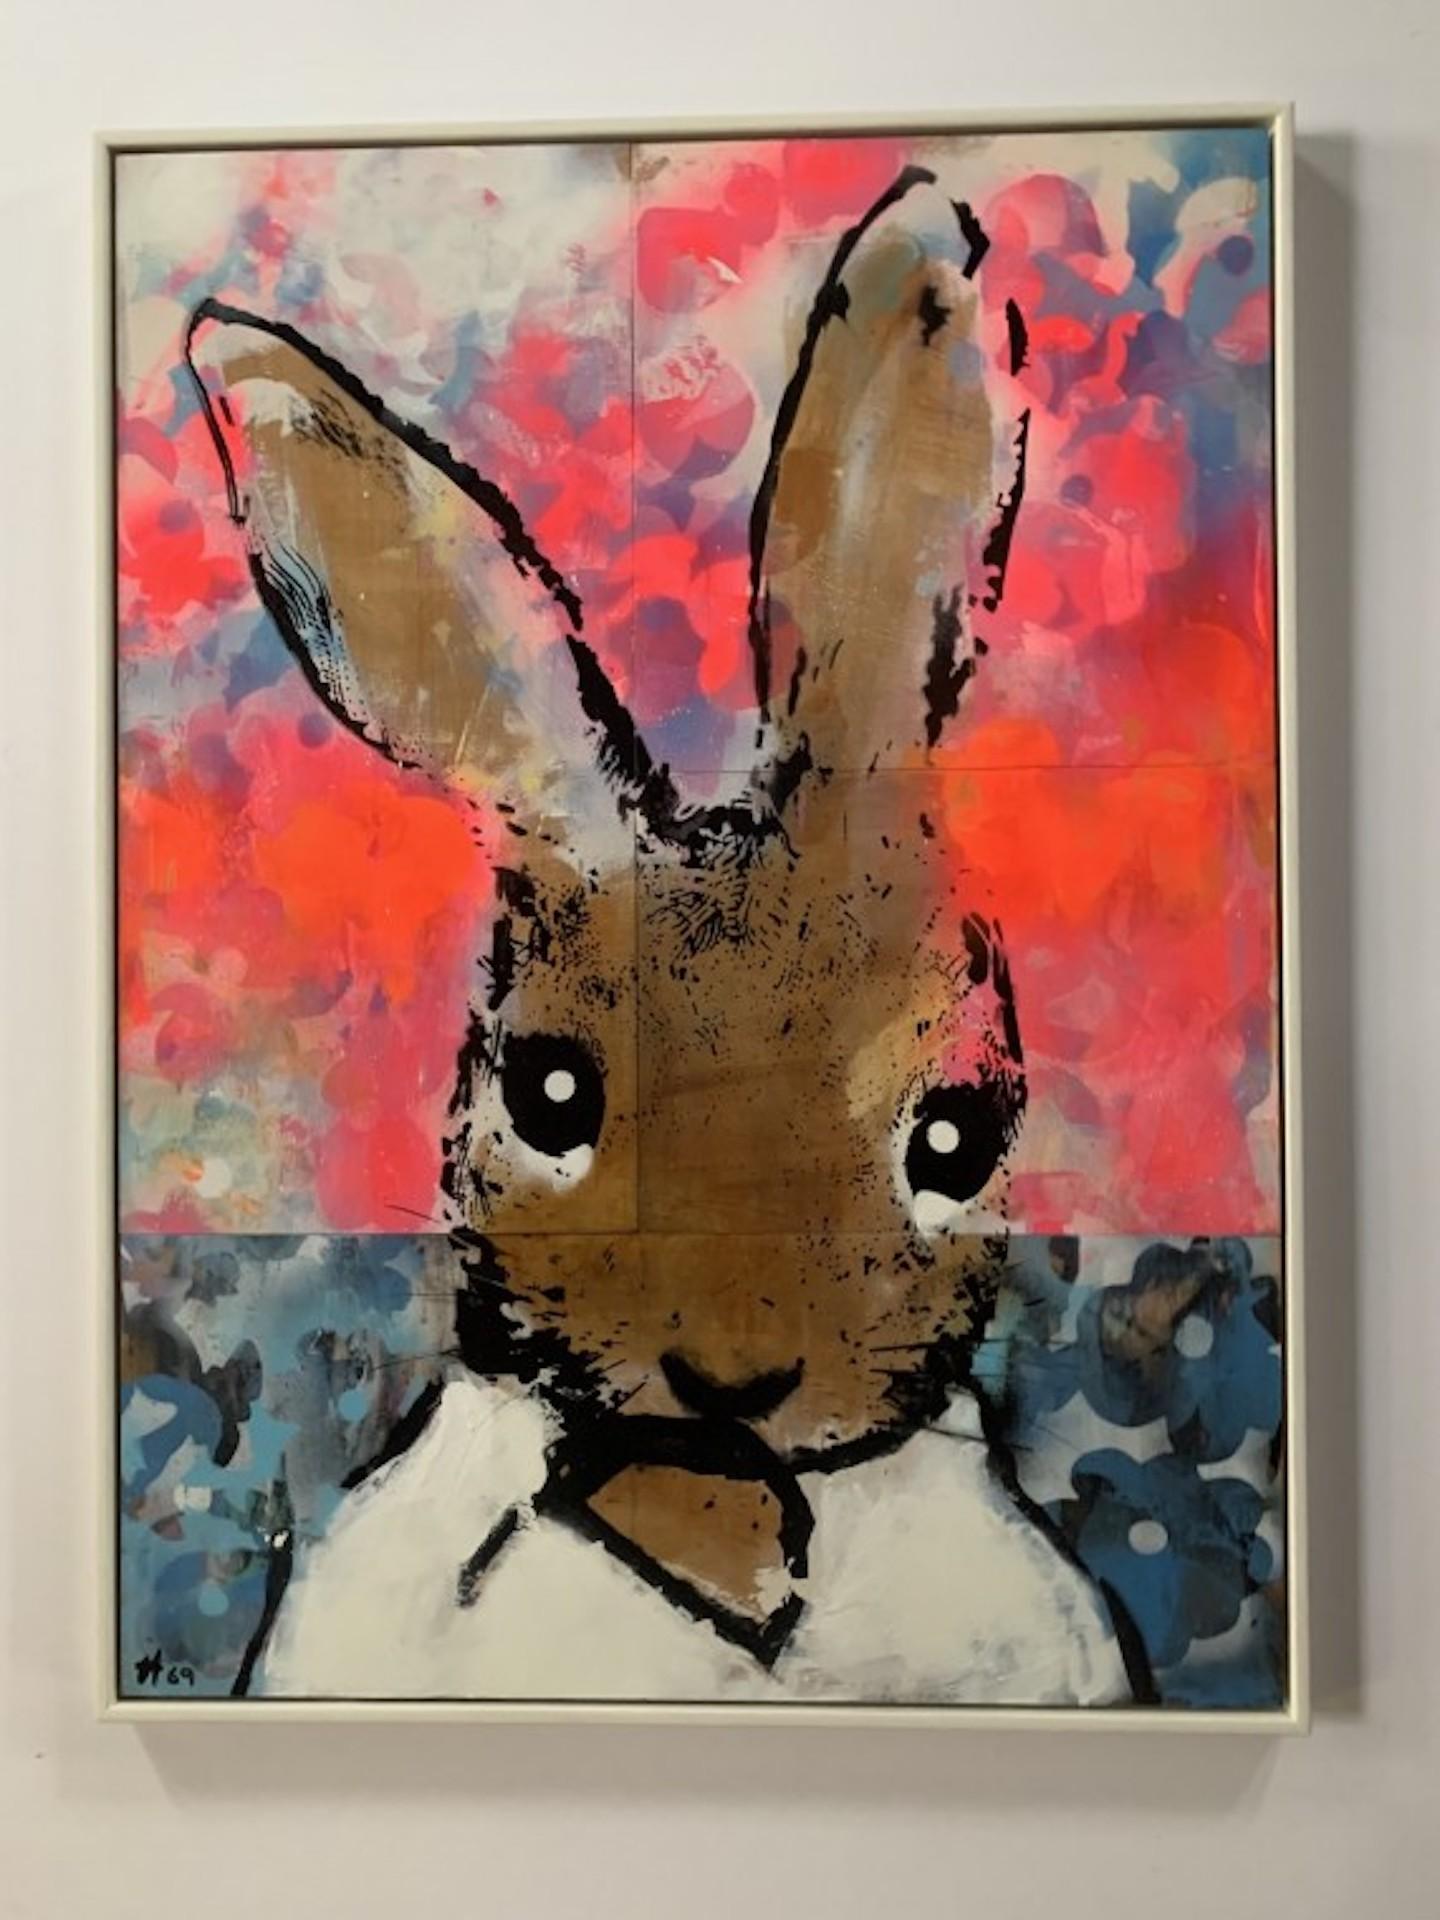 Harry Bunce, Sorry #69, Contemporary Art, Affordable Art, Animal Art 2